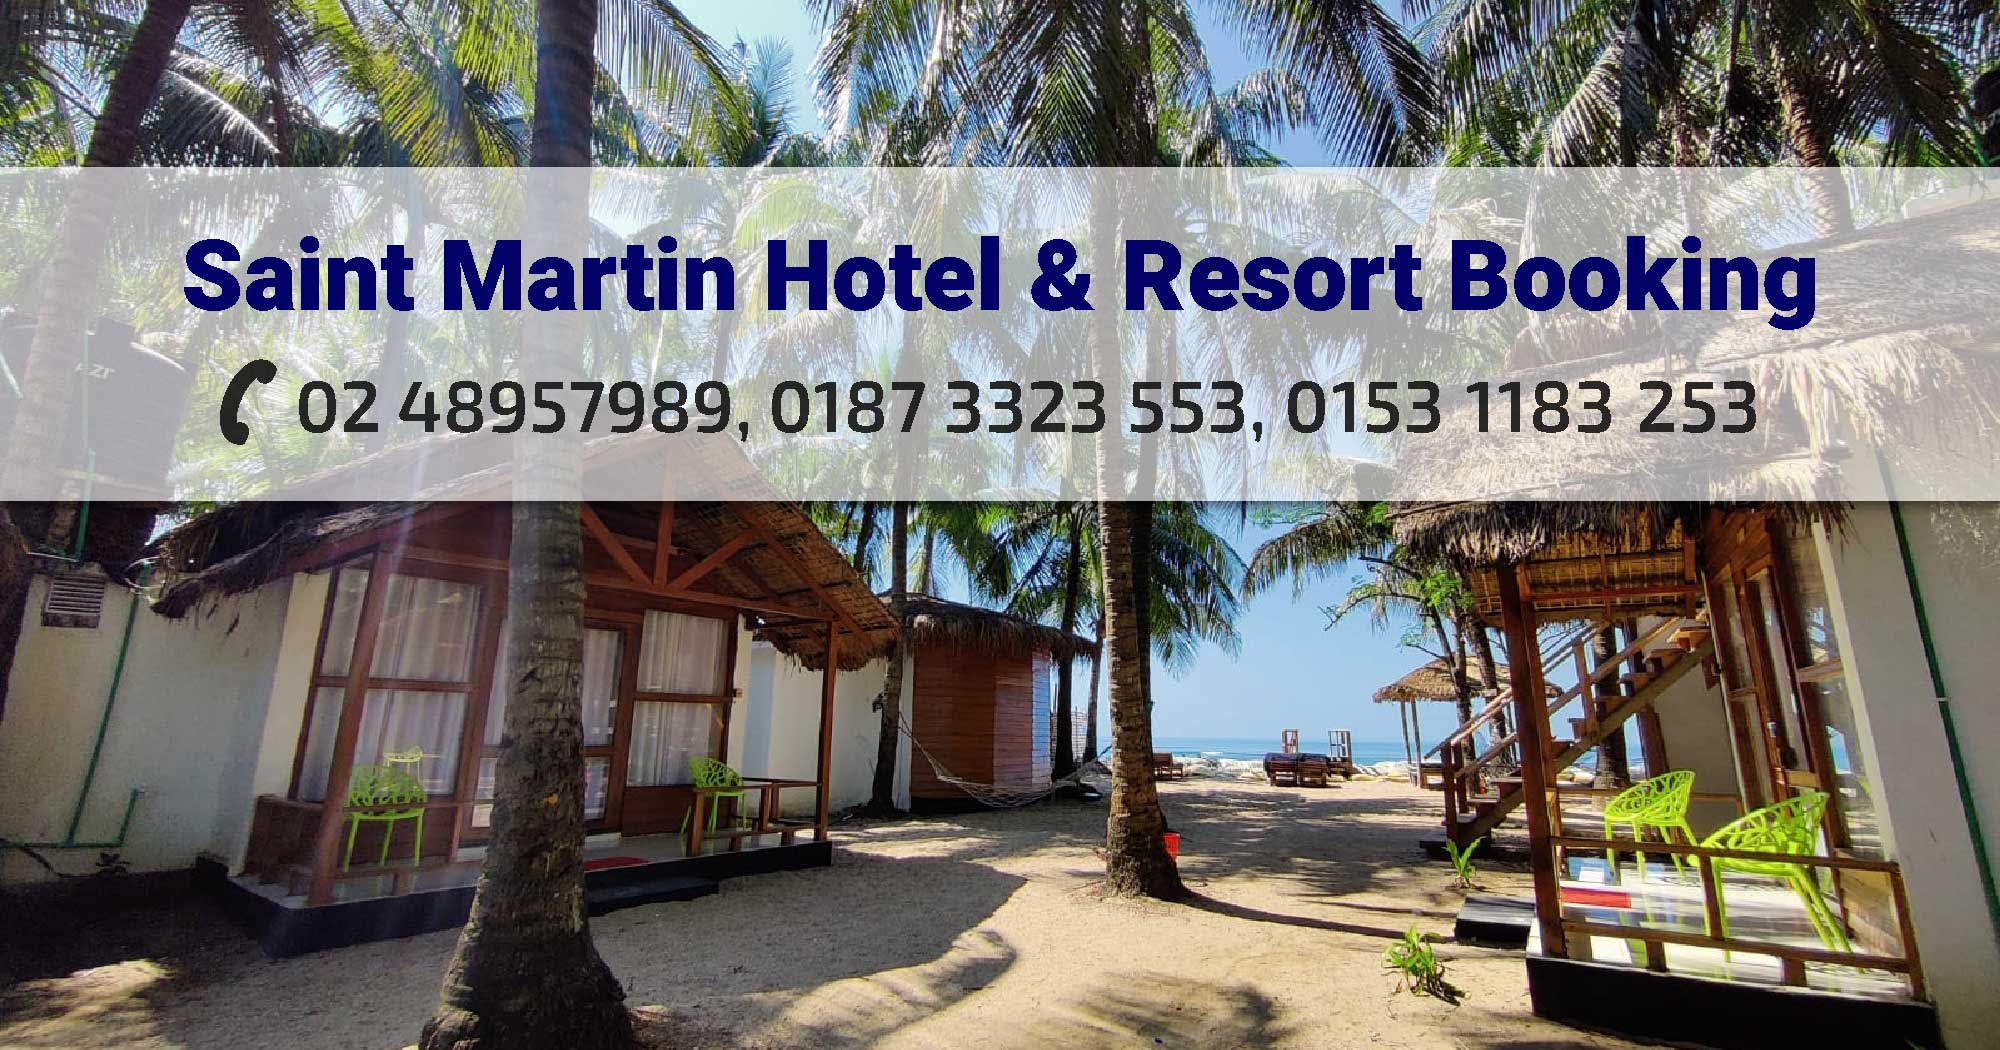 Saint Martin Hotel & Resort Booking